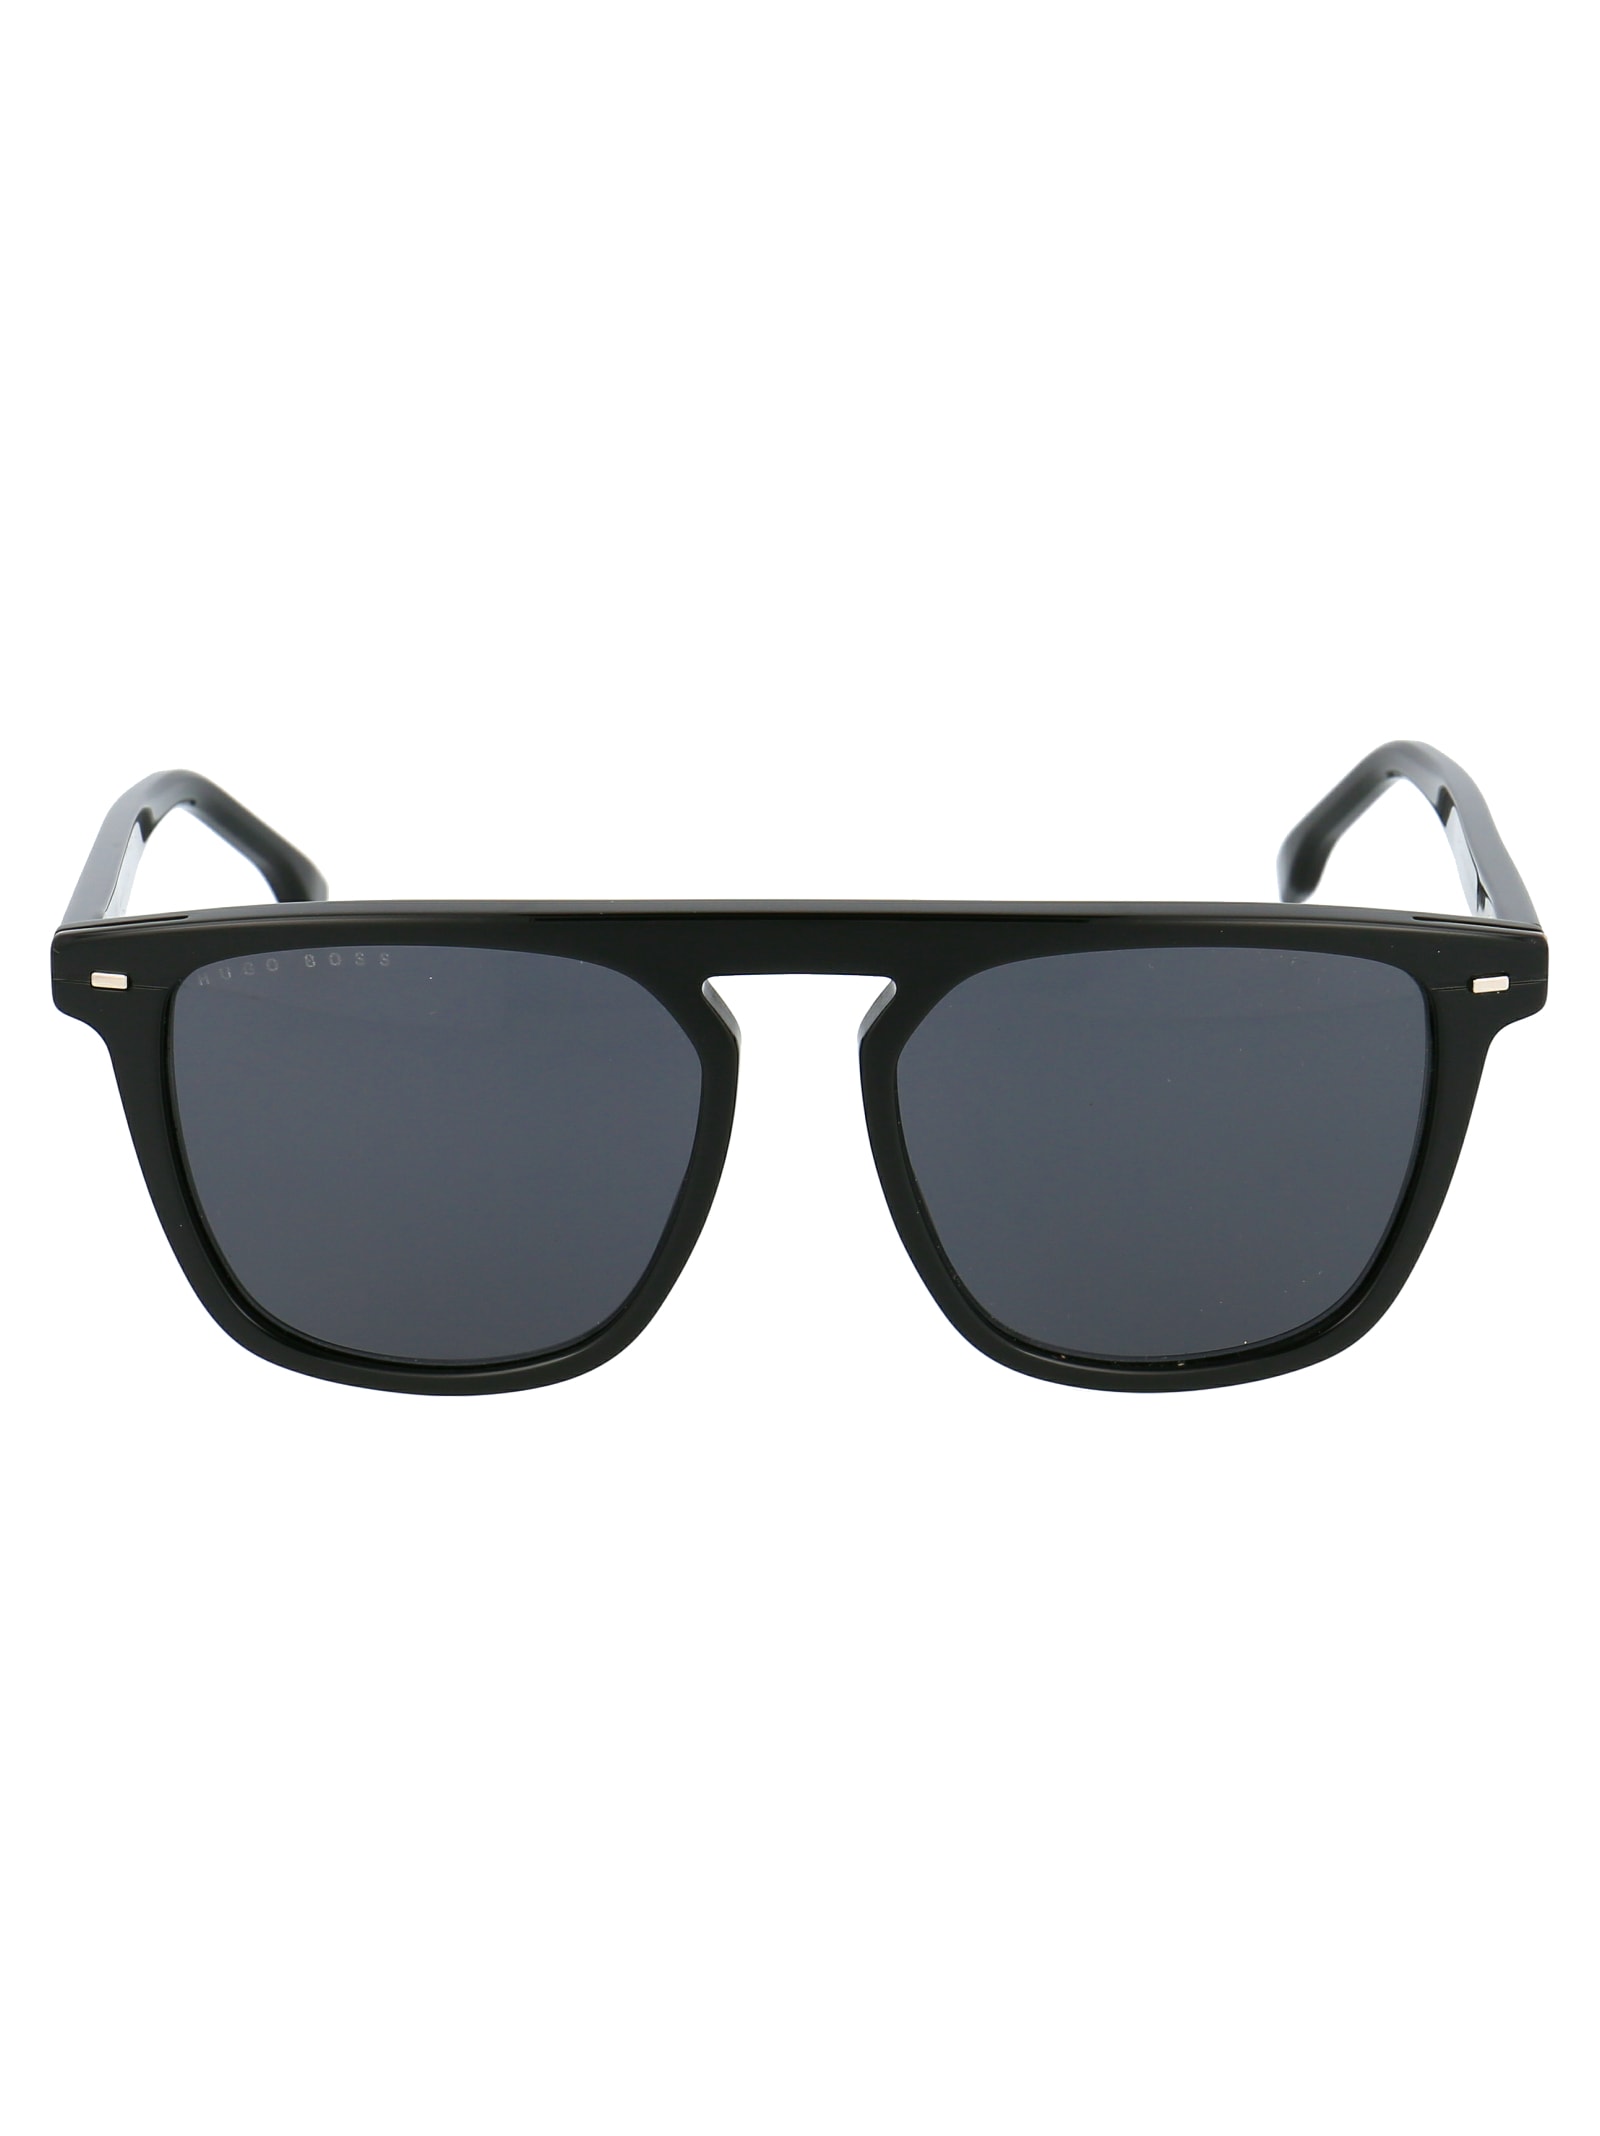 Hugo Boss Boss 1127/s Sunglasses